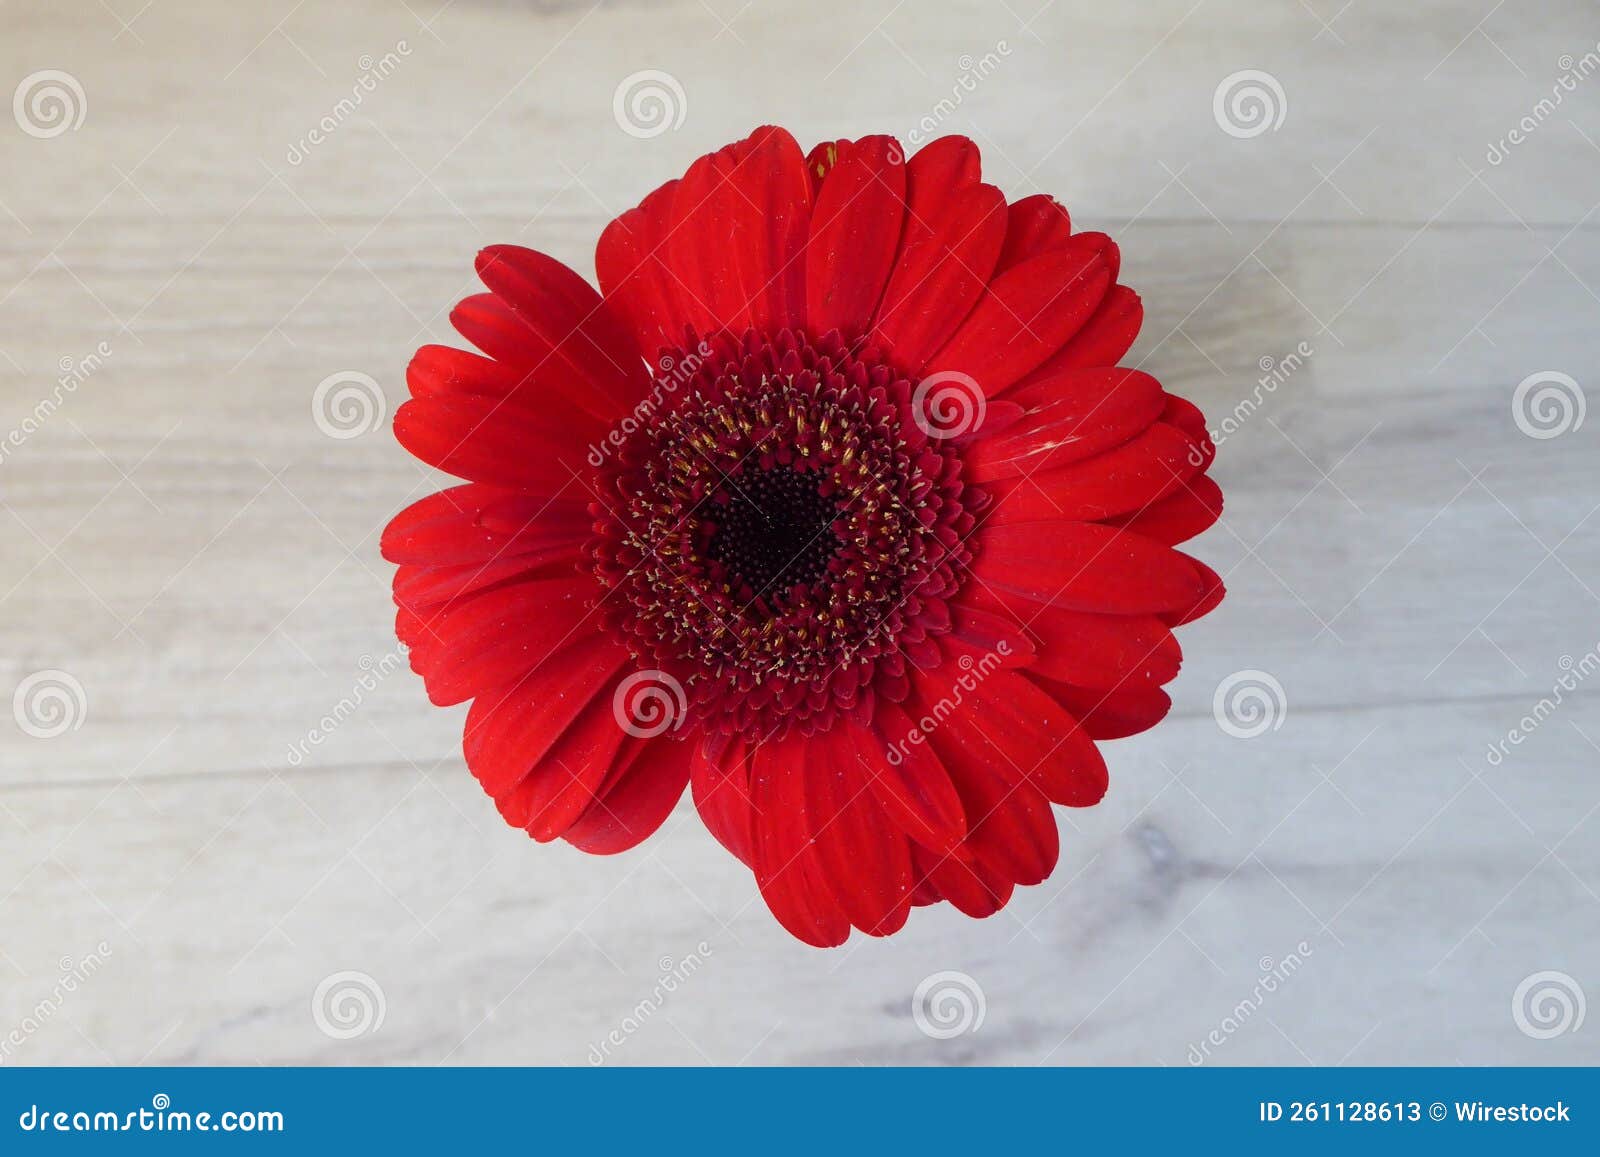 red gerbera vuelta flower on a white wooden surface